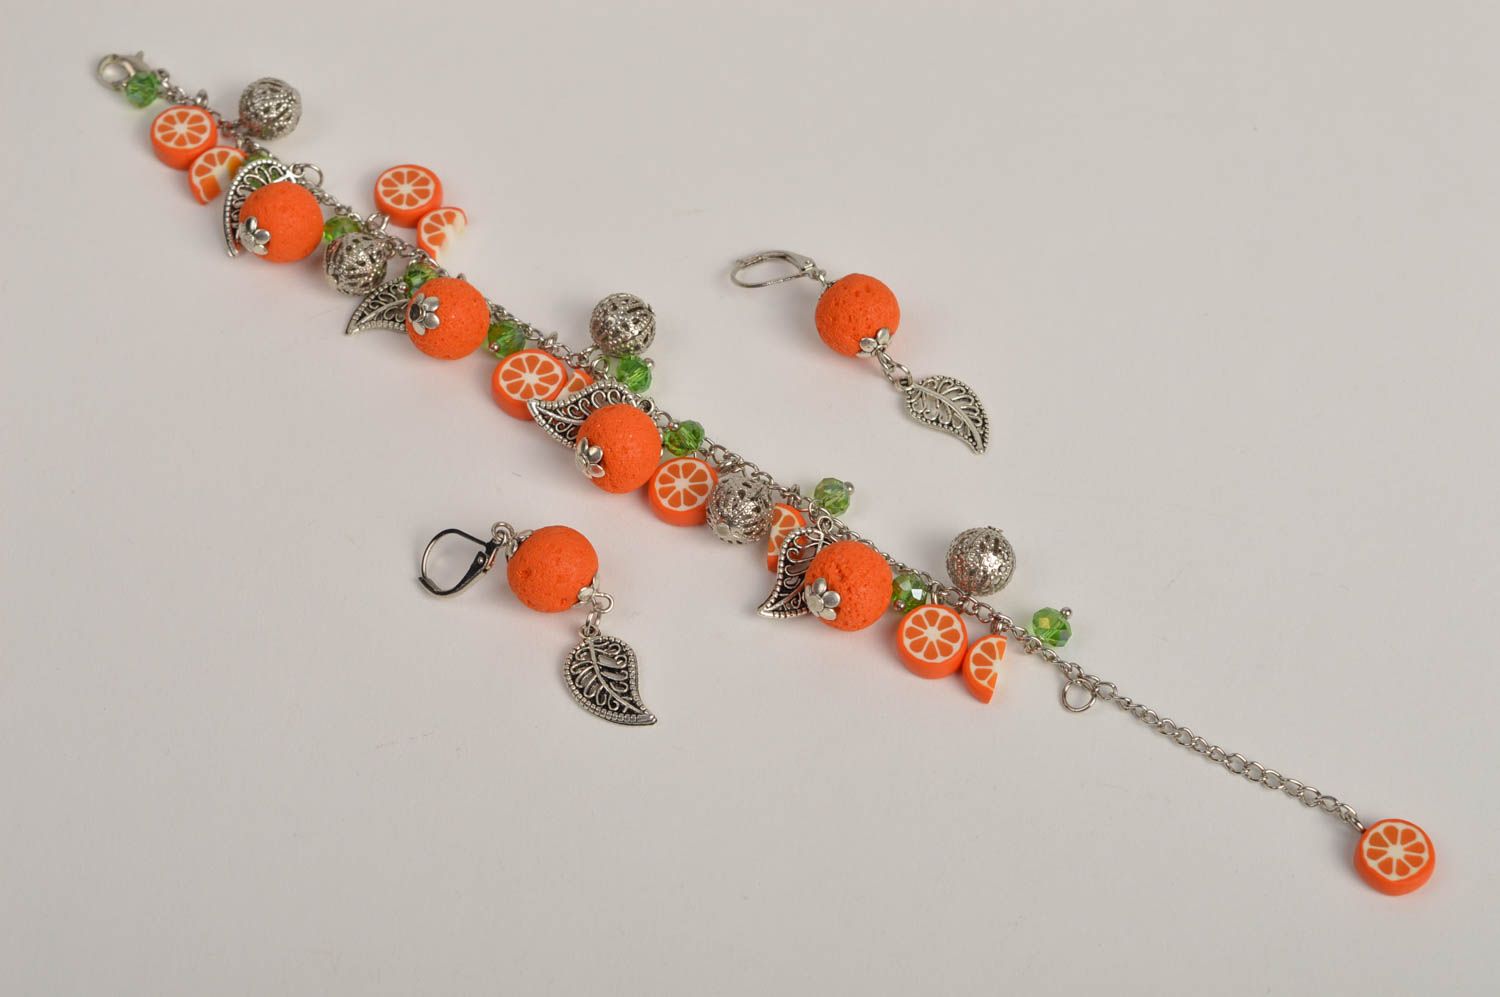 Wrist bracelet fashion earrings polymer clay citrus jewelry women jewelry photo 5